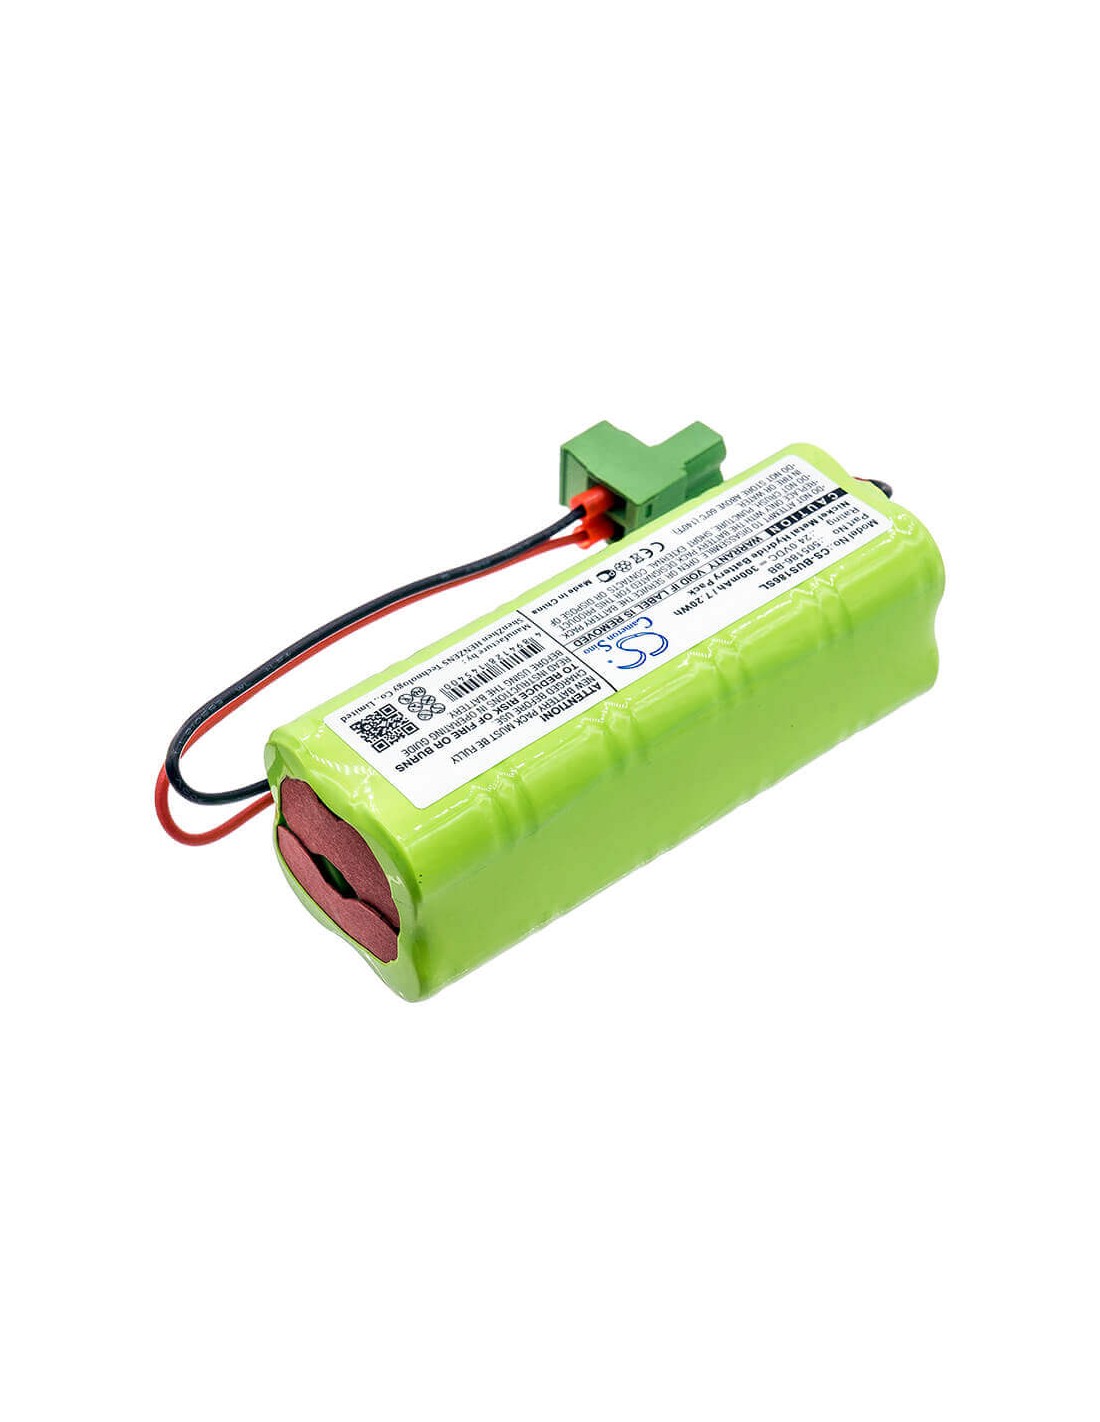 Battery for Besam, Automatische Turoffnung Emc, Automatische Turoffnung Emcm 24V, 300mAh - 7.20Wh